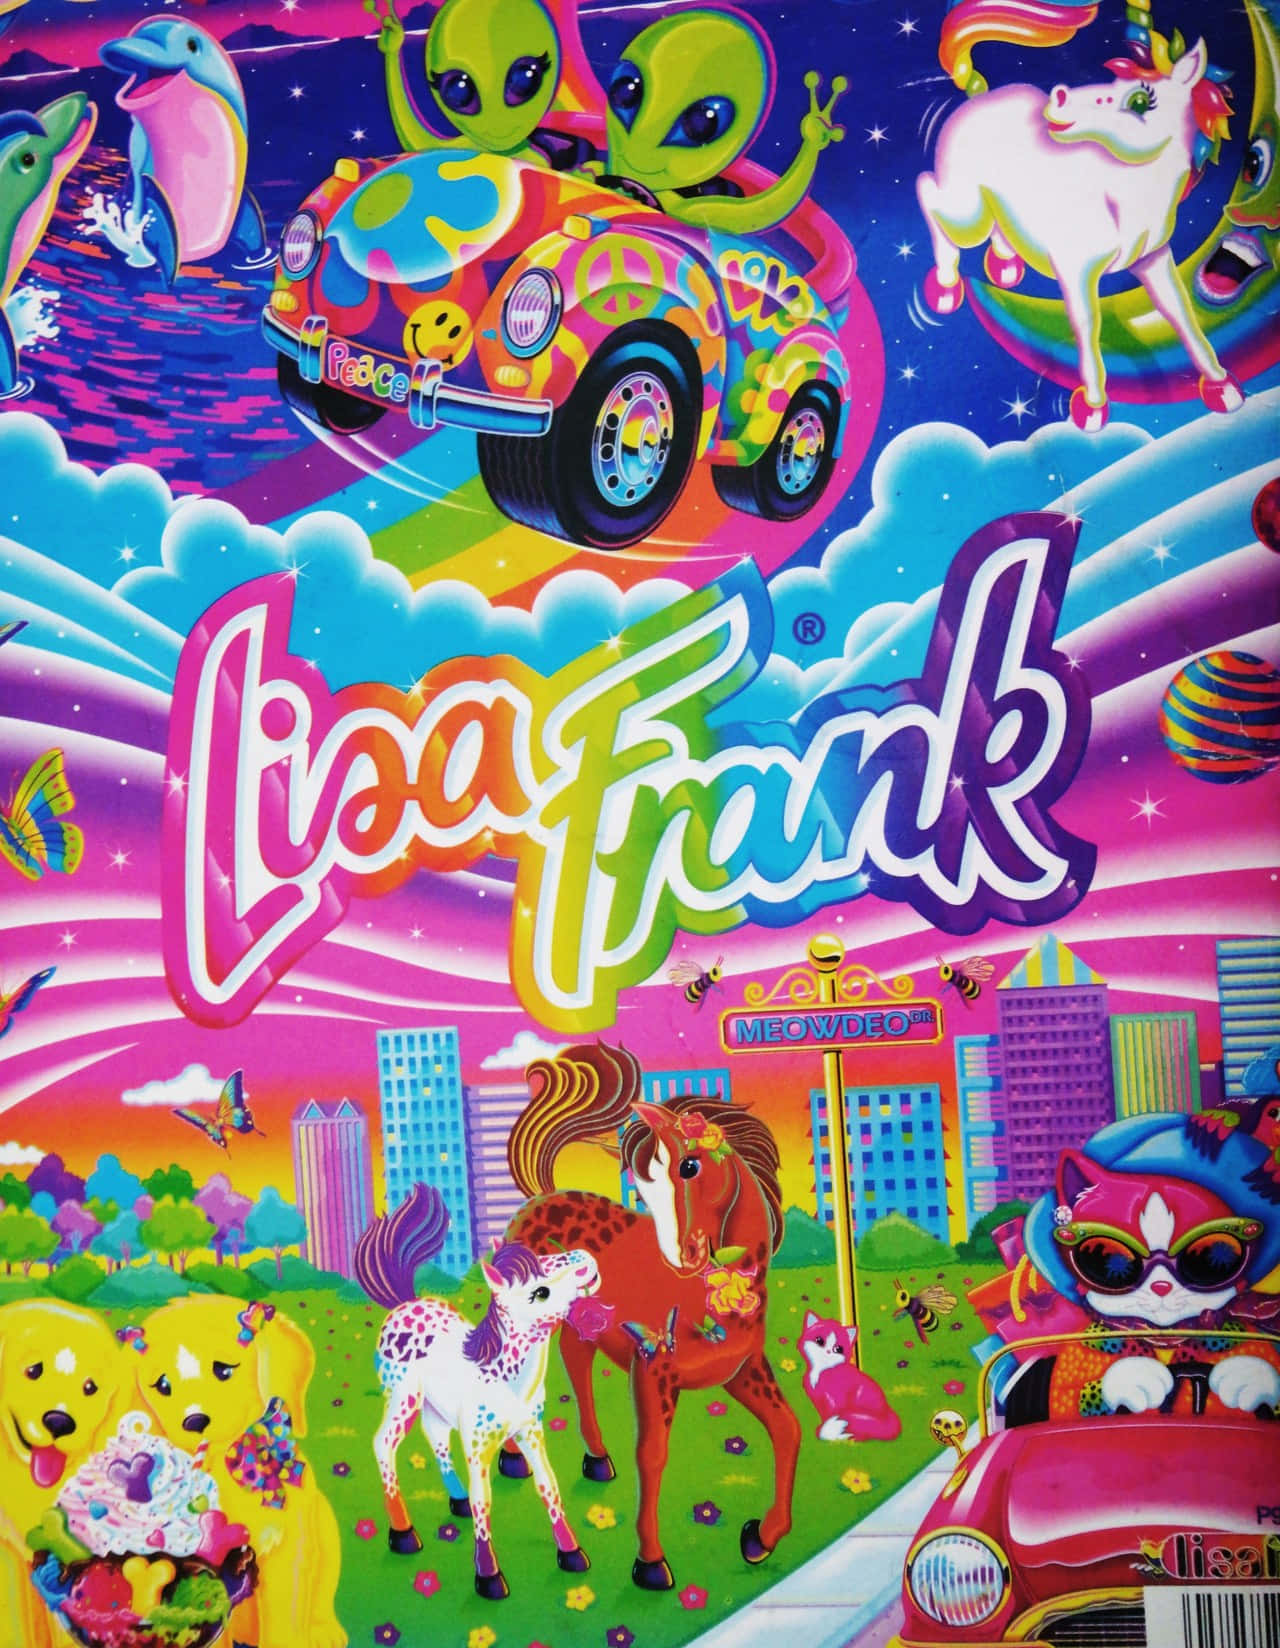 Enjoy a Magical Ride on this Majestic Lisa Frank Unicorn Wallpaper